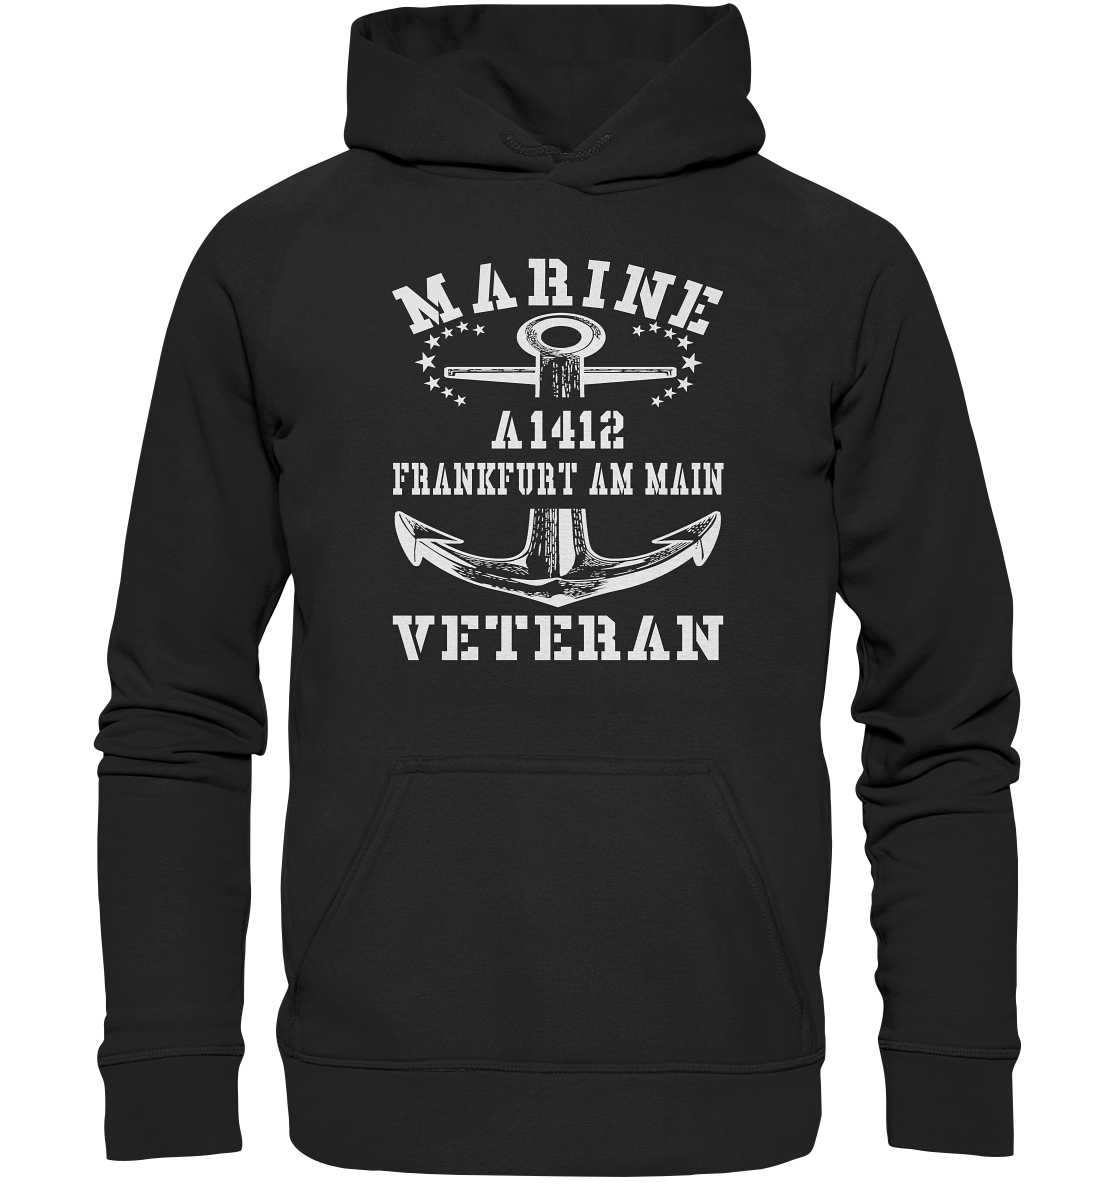 EGV A1412 FRANKFURT AM MAIN Marine Veteran - Basic Unisex Hoodie XL